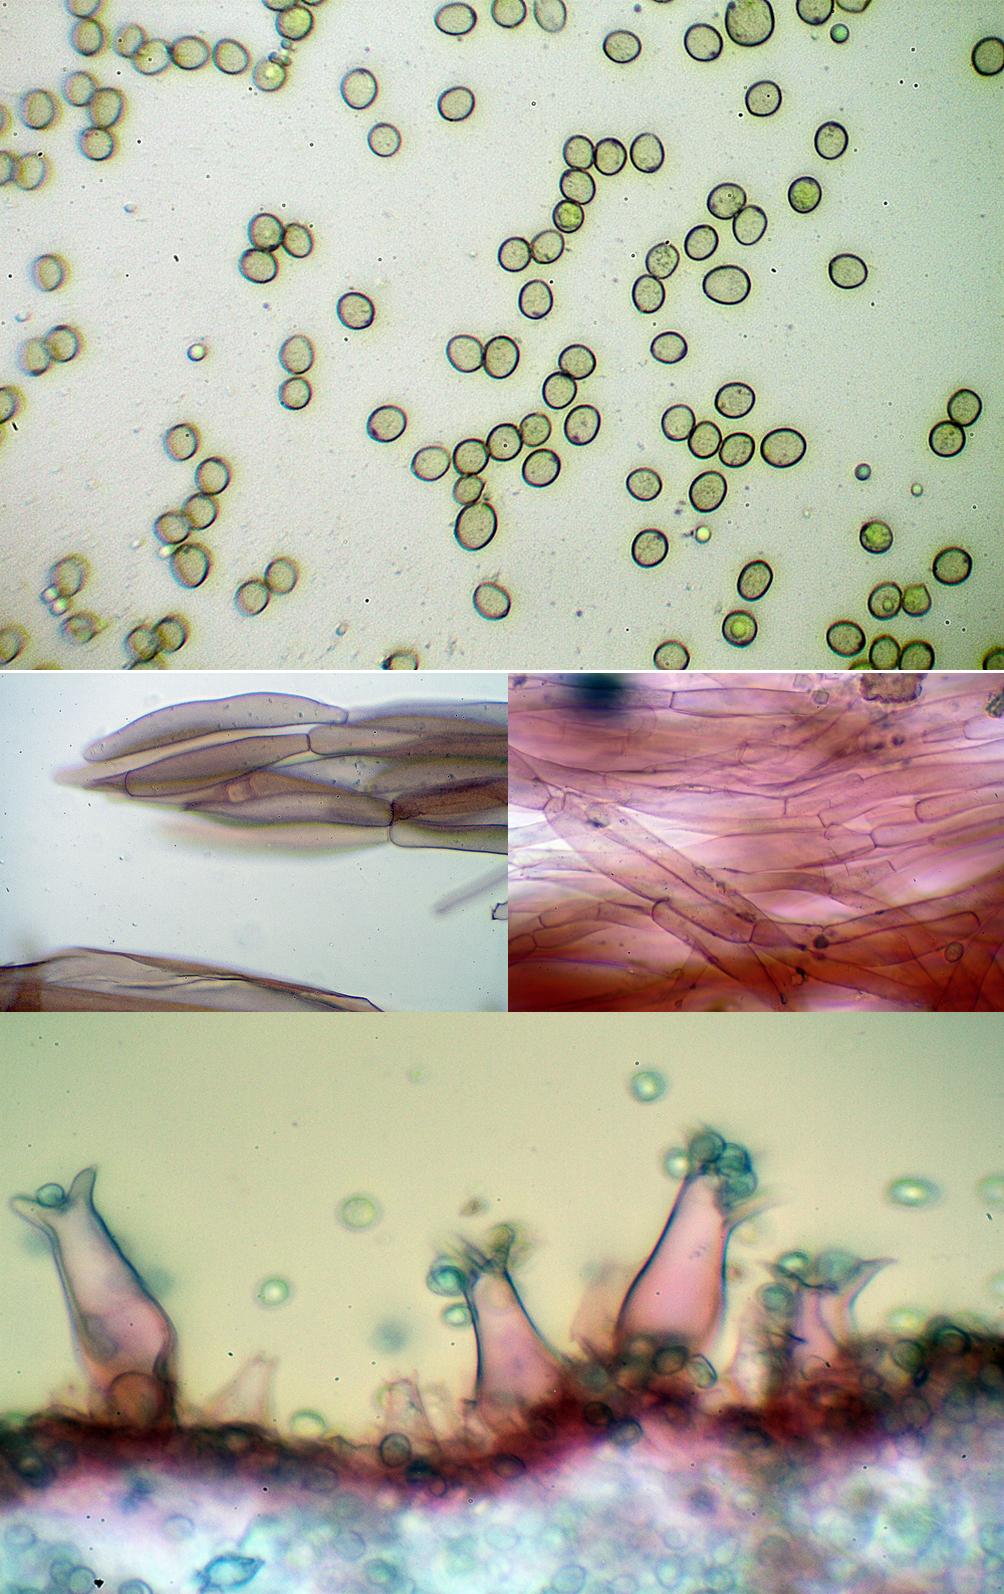 Pluteus petasatus microscopía